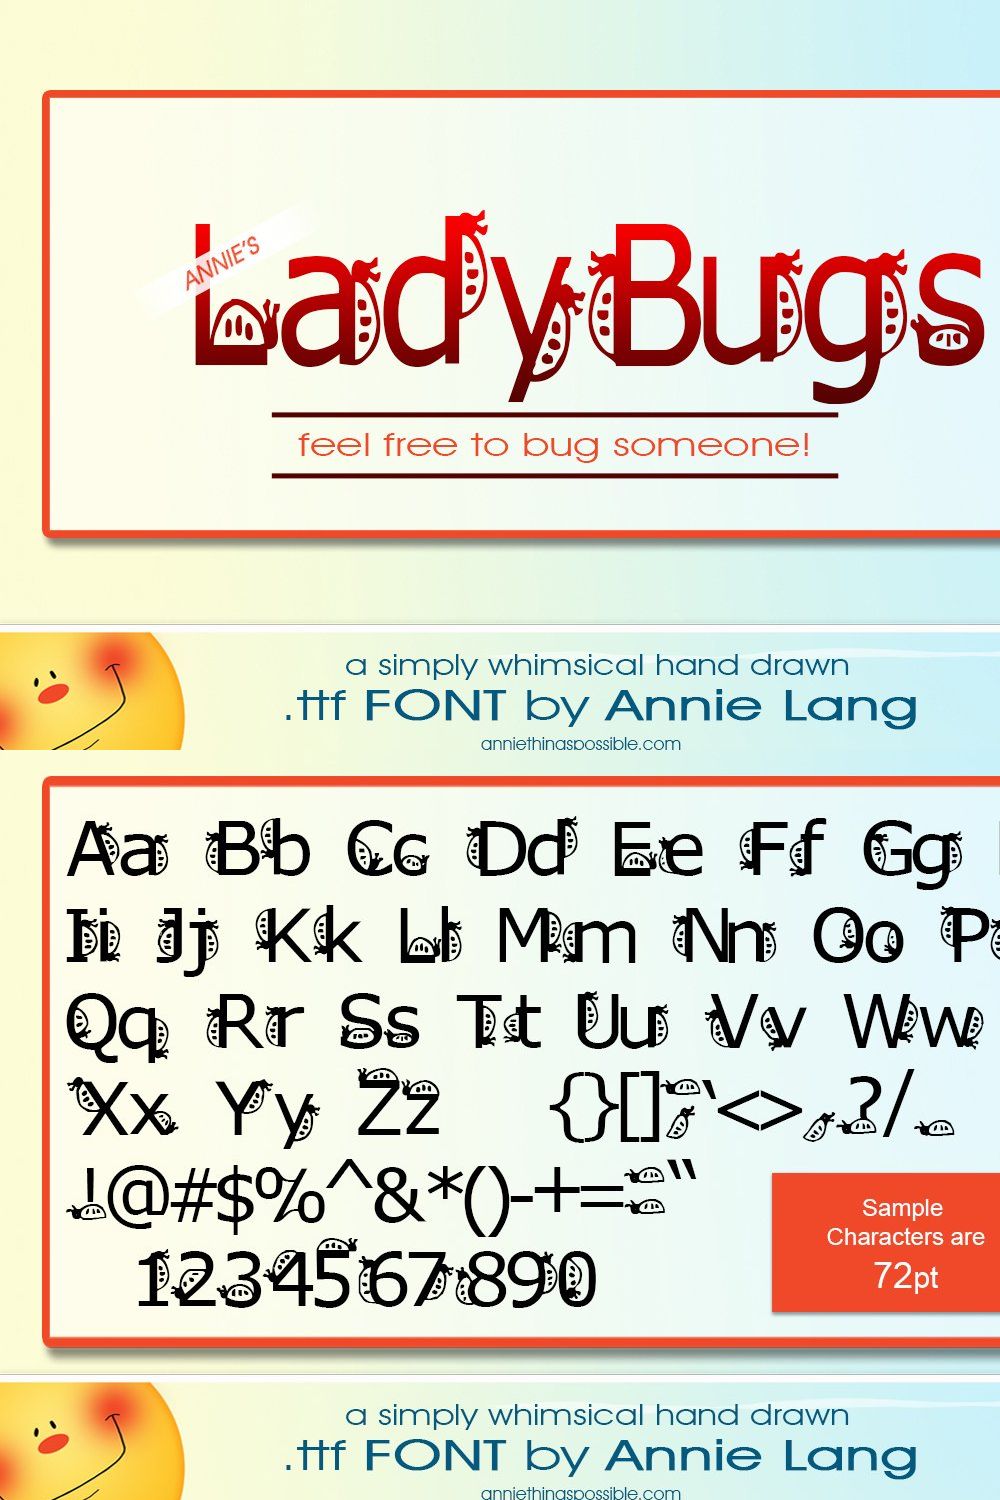 Annie's LadyBugs Font pinterest preview image.